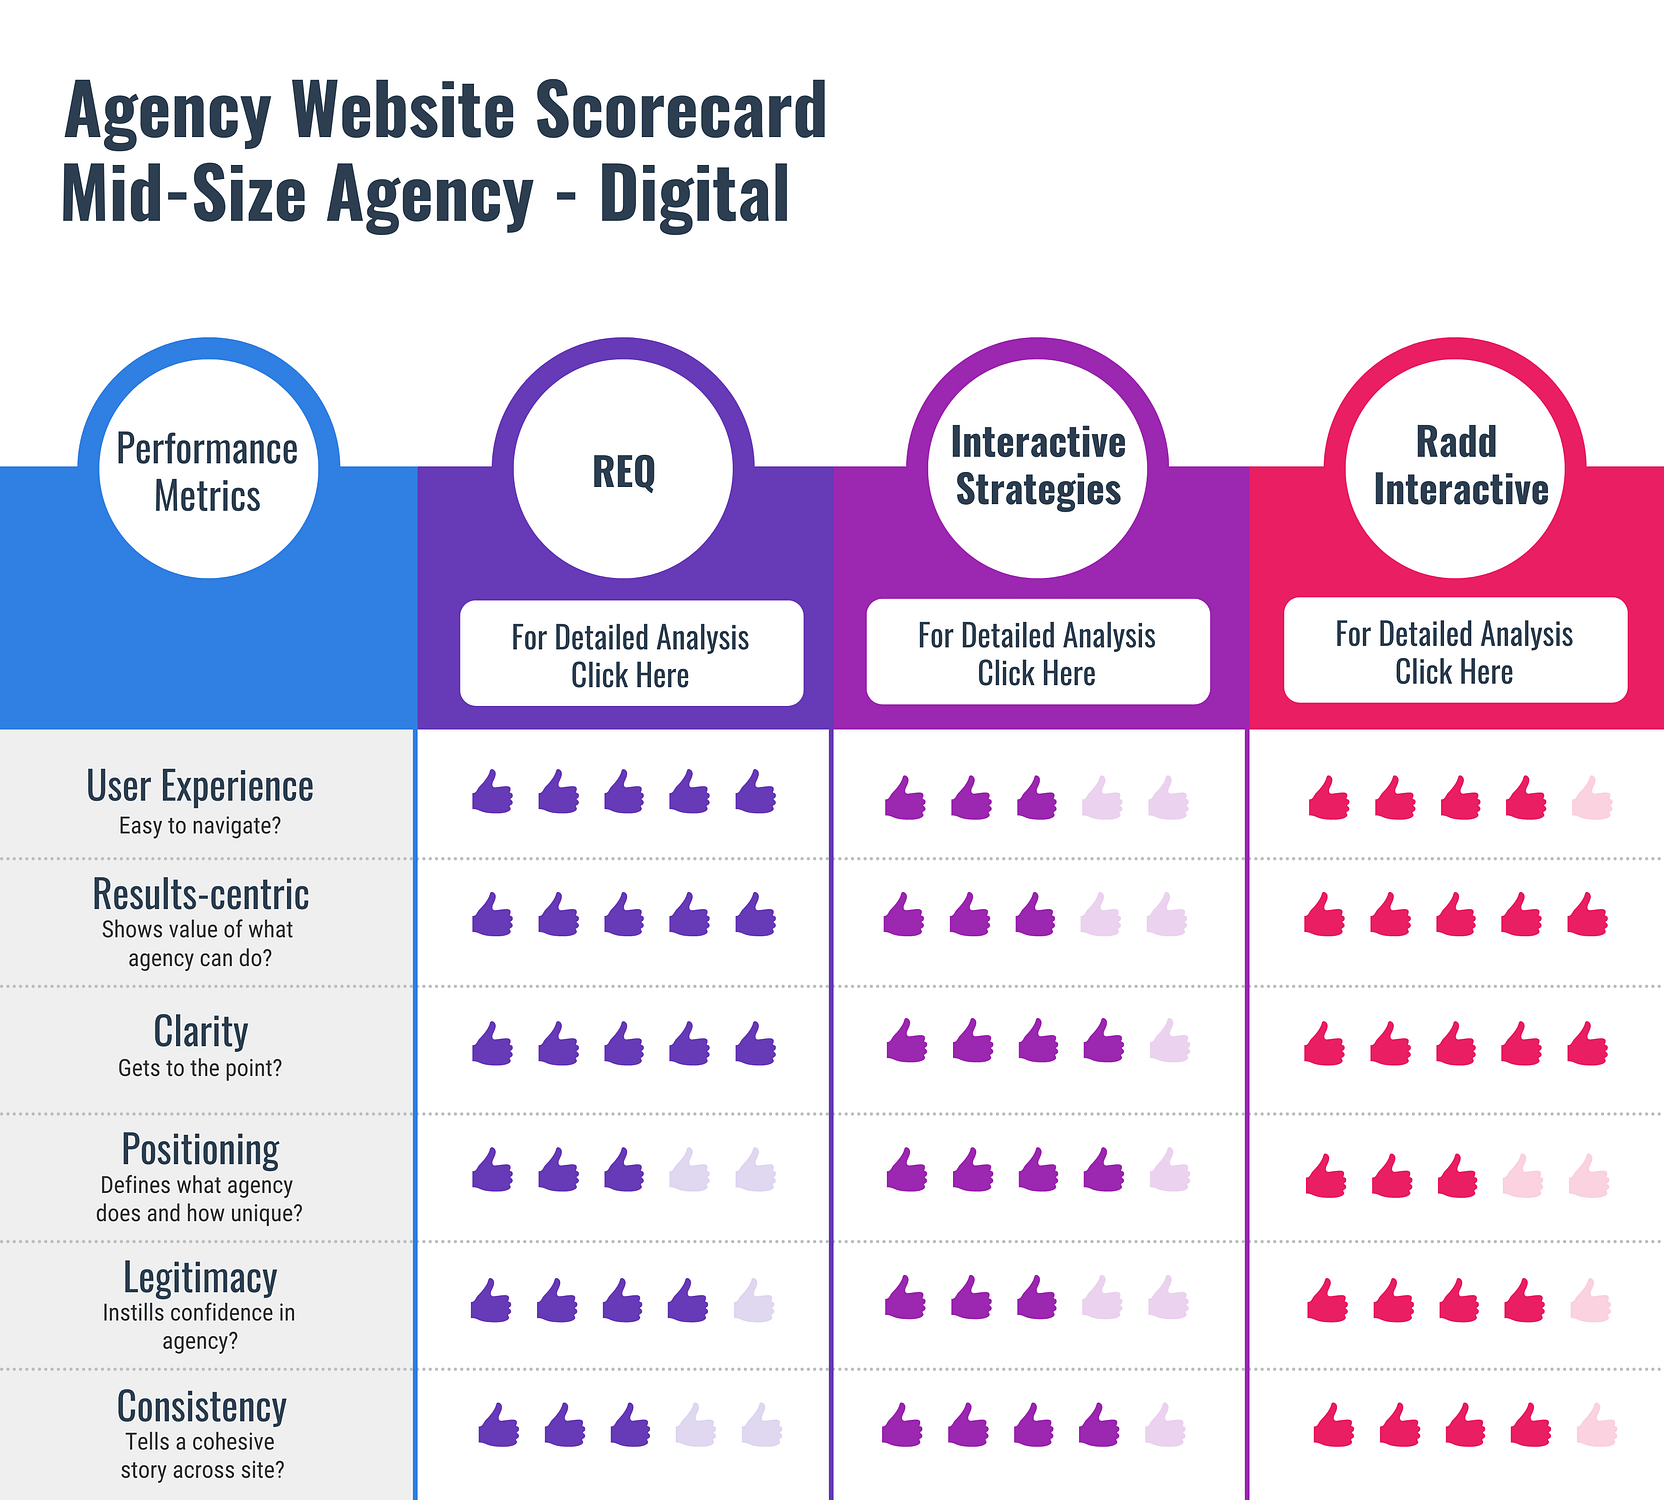 Mid-Size Digital Agency Scorecard Summary